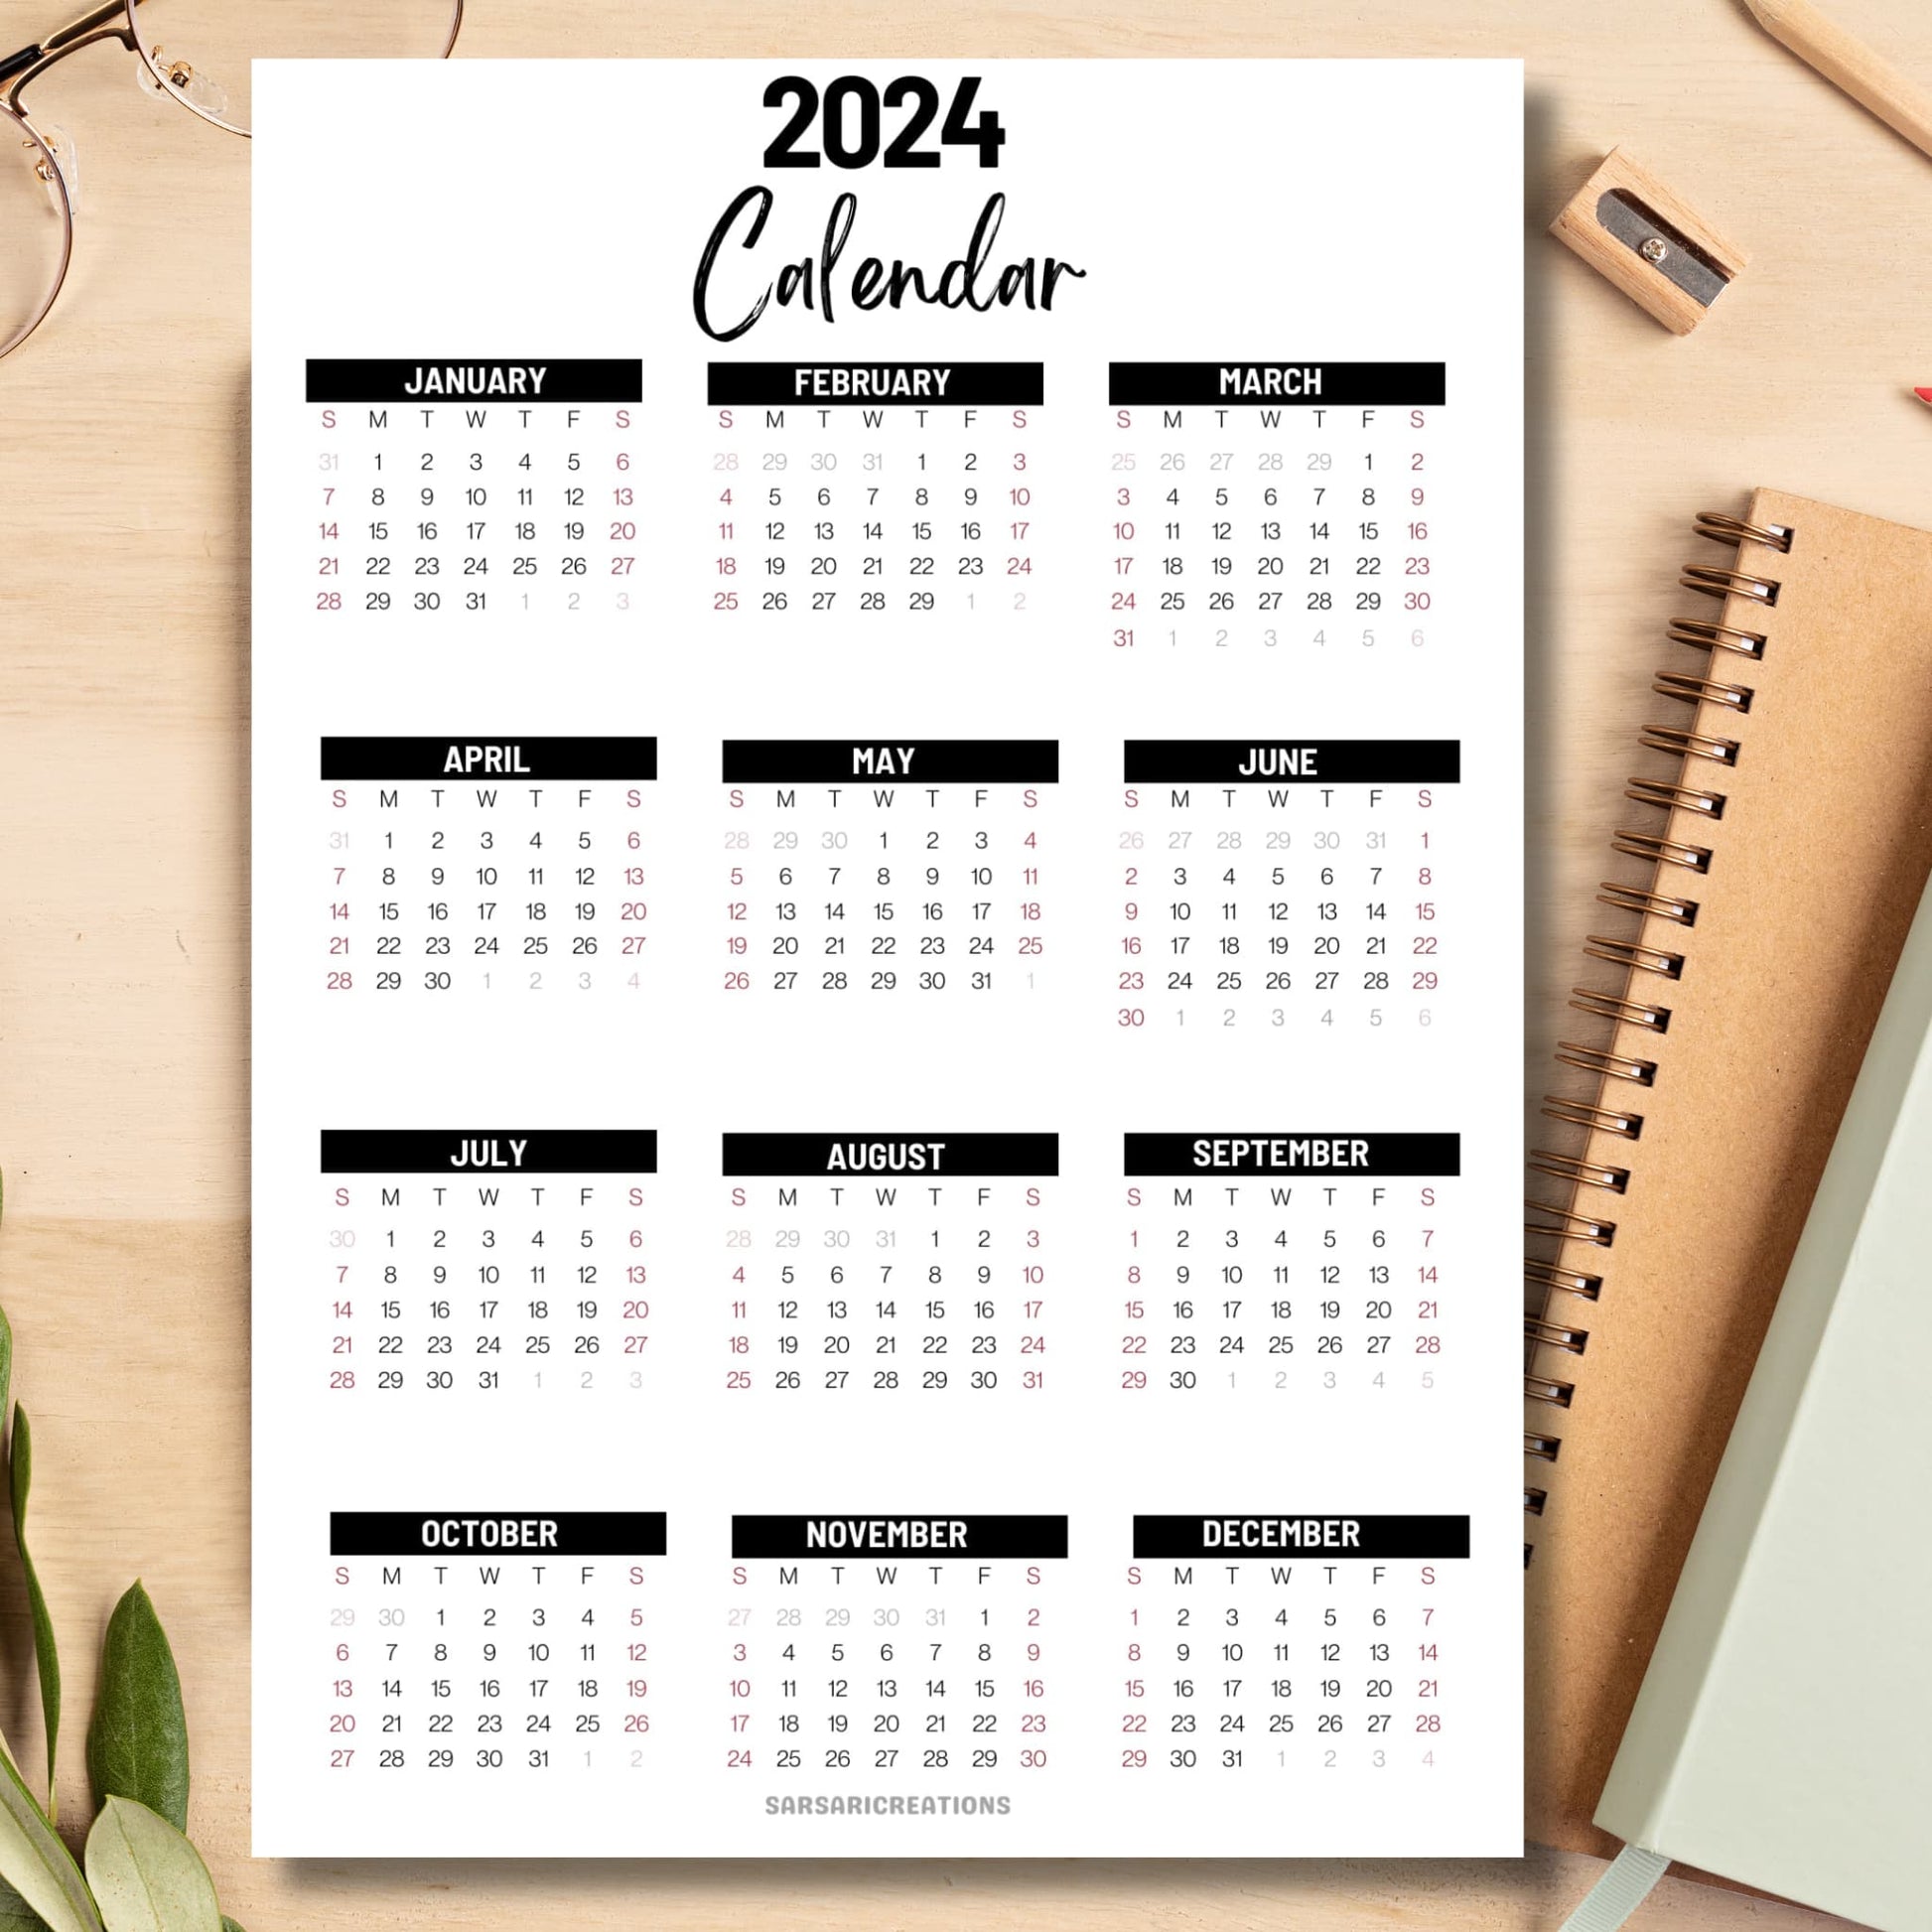 Office essential 2024 calendar on light brown wooden desk with school supplies like notebook, pencil, sharpener.